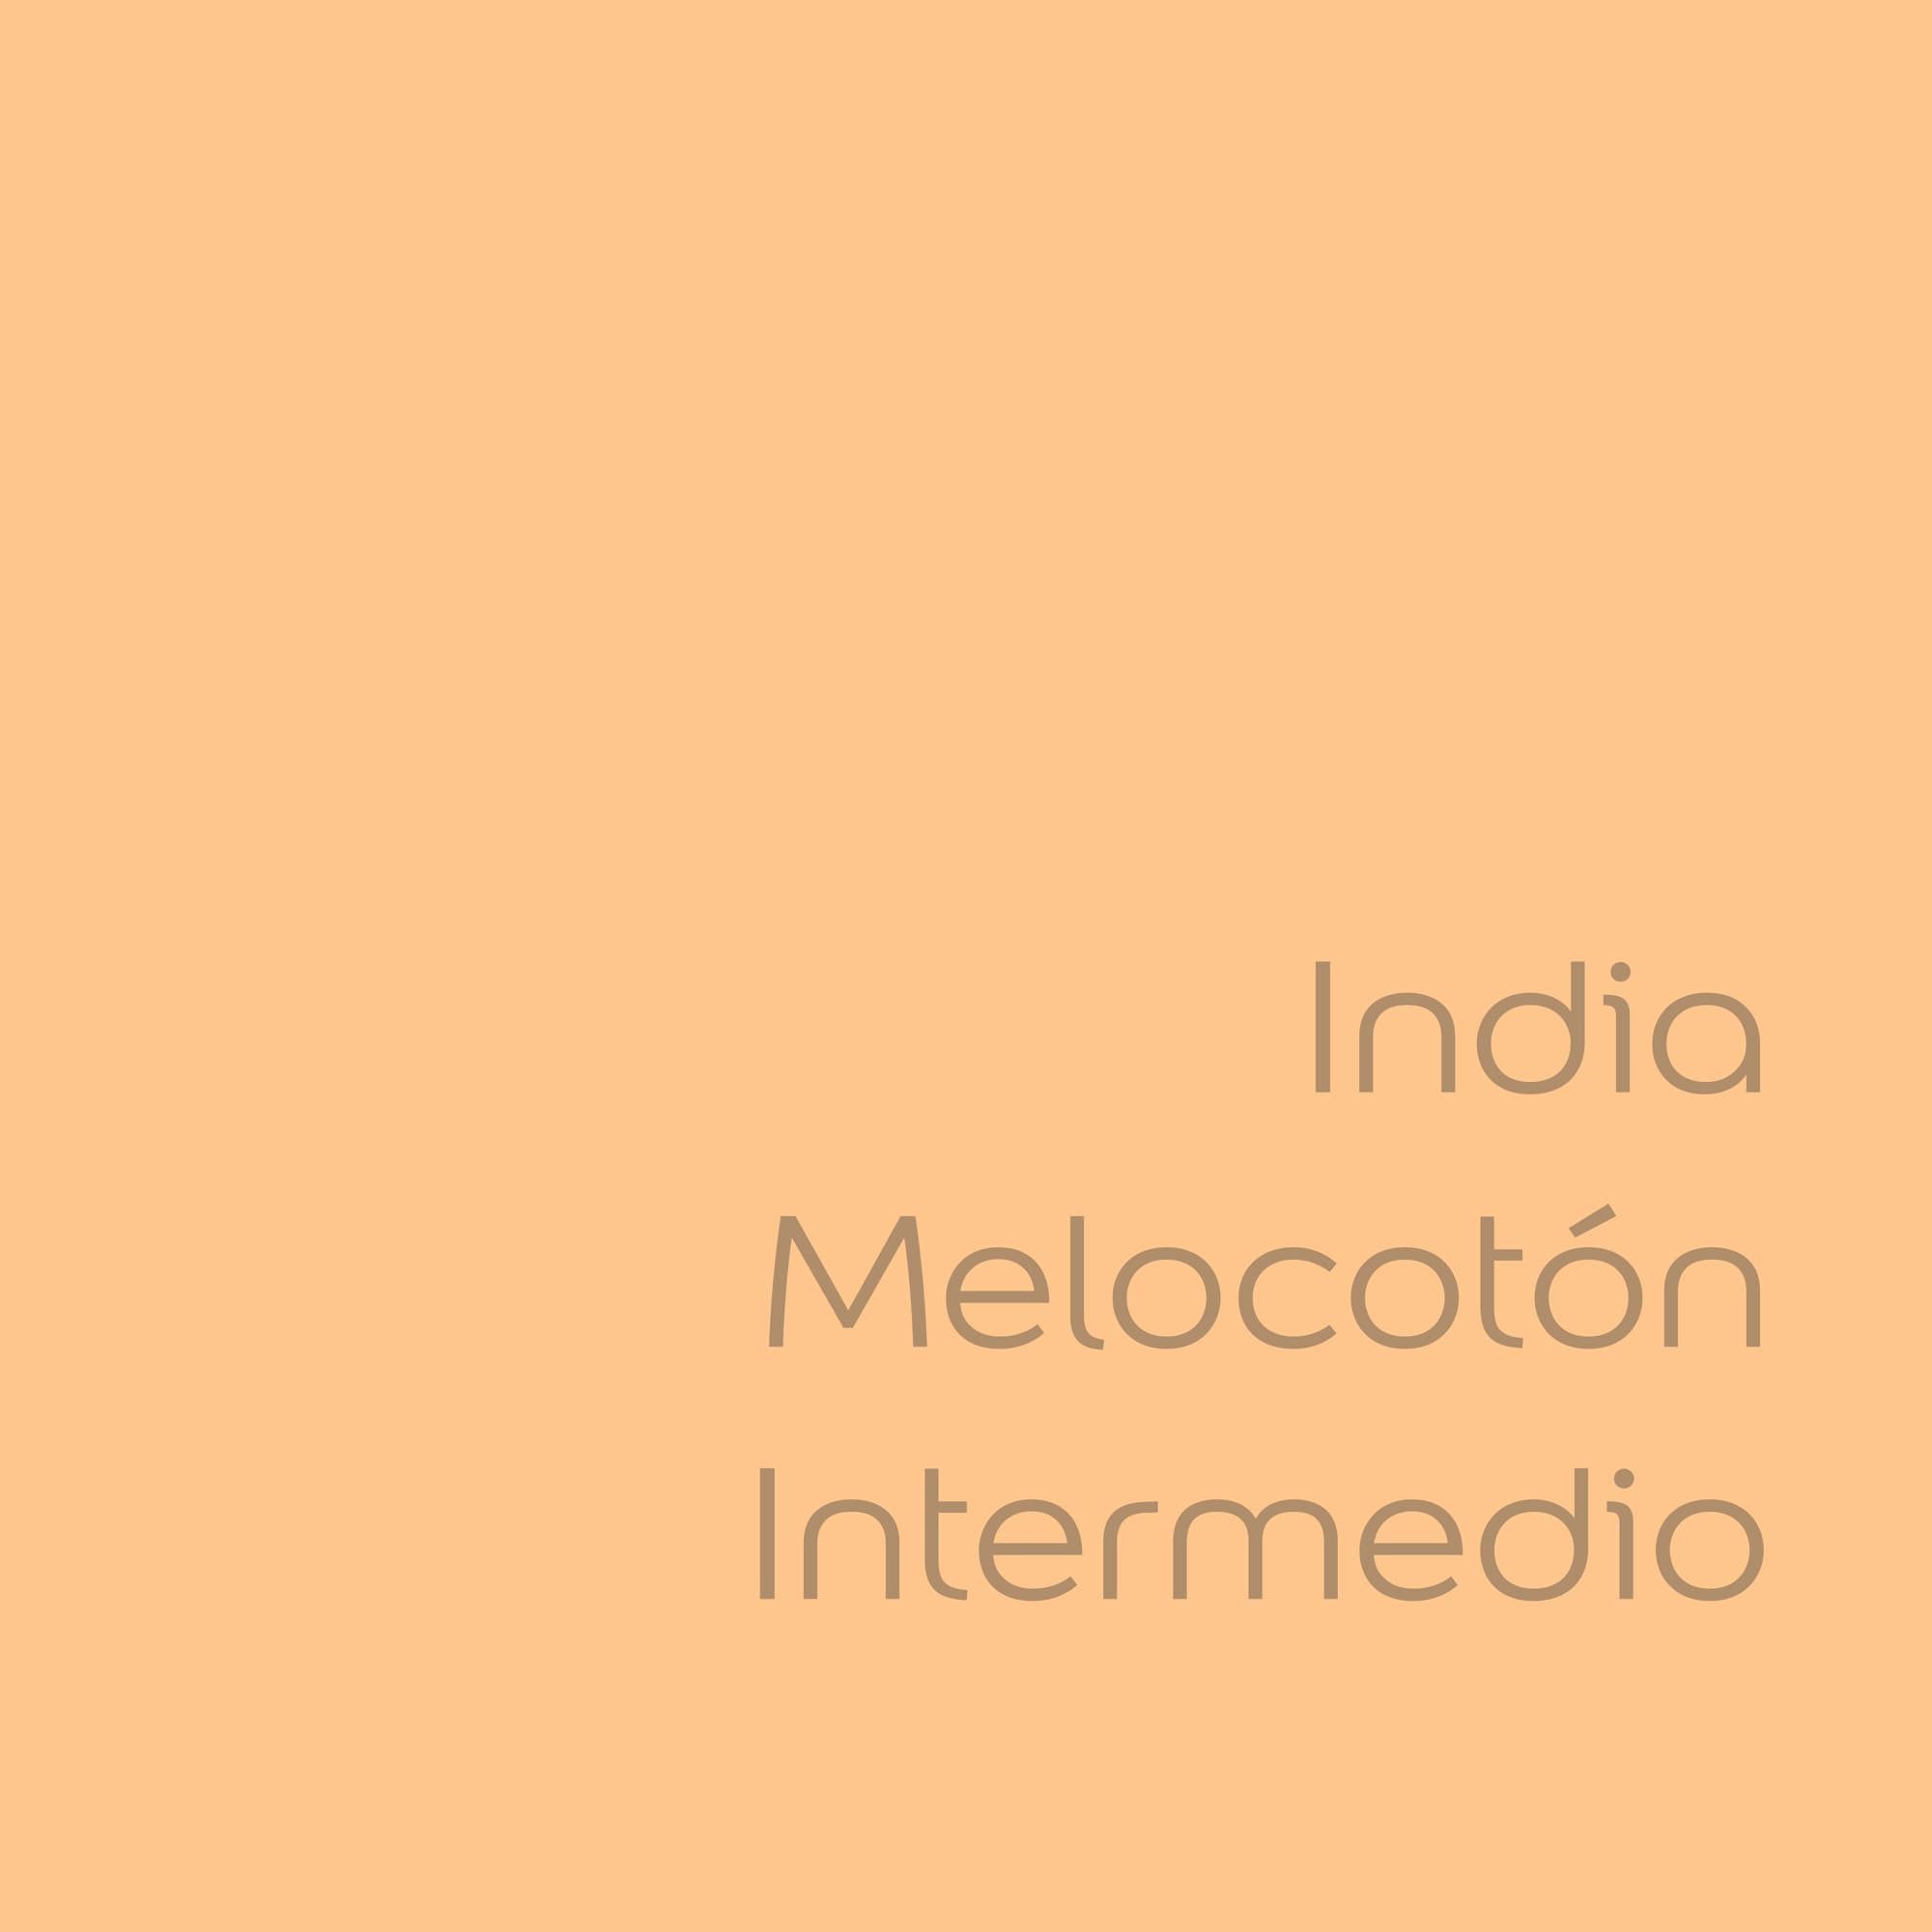 tester de color de pintura bruguer cdm india melocoton intermedio color